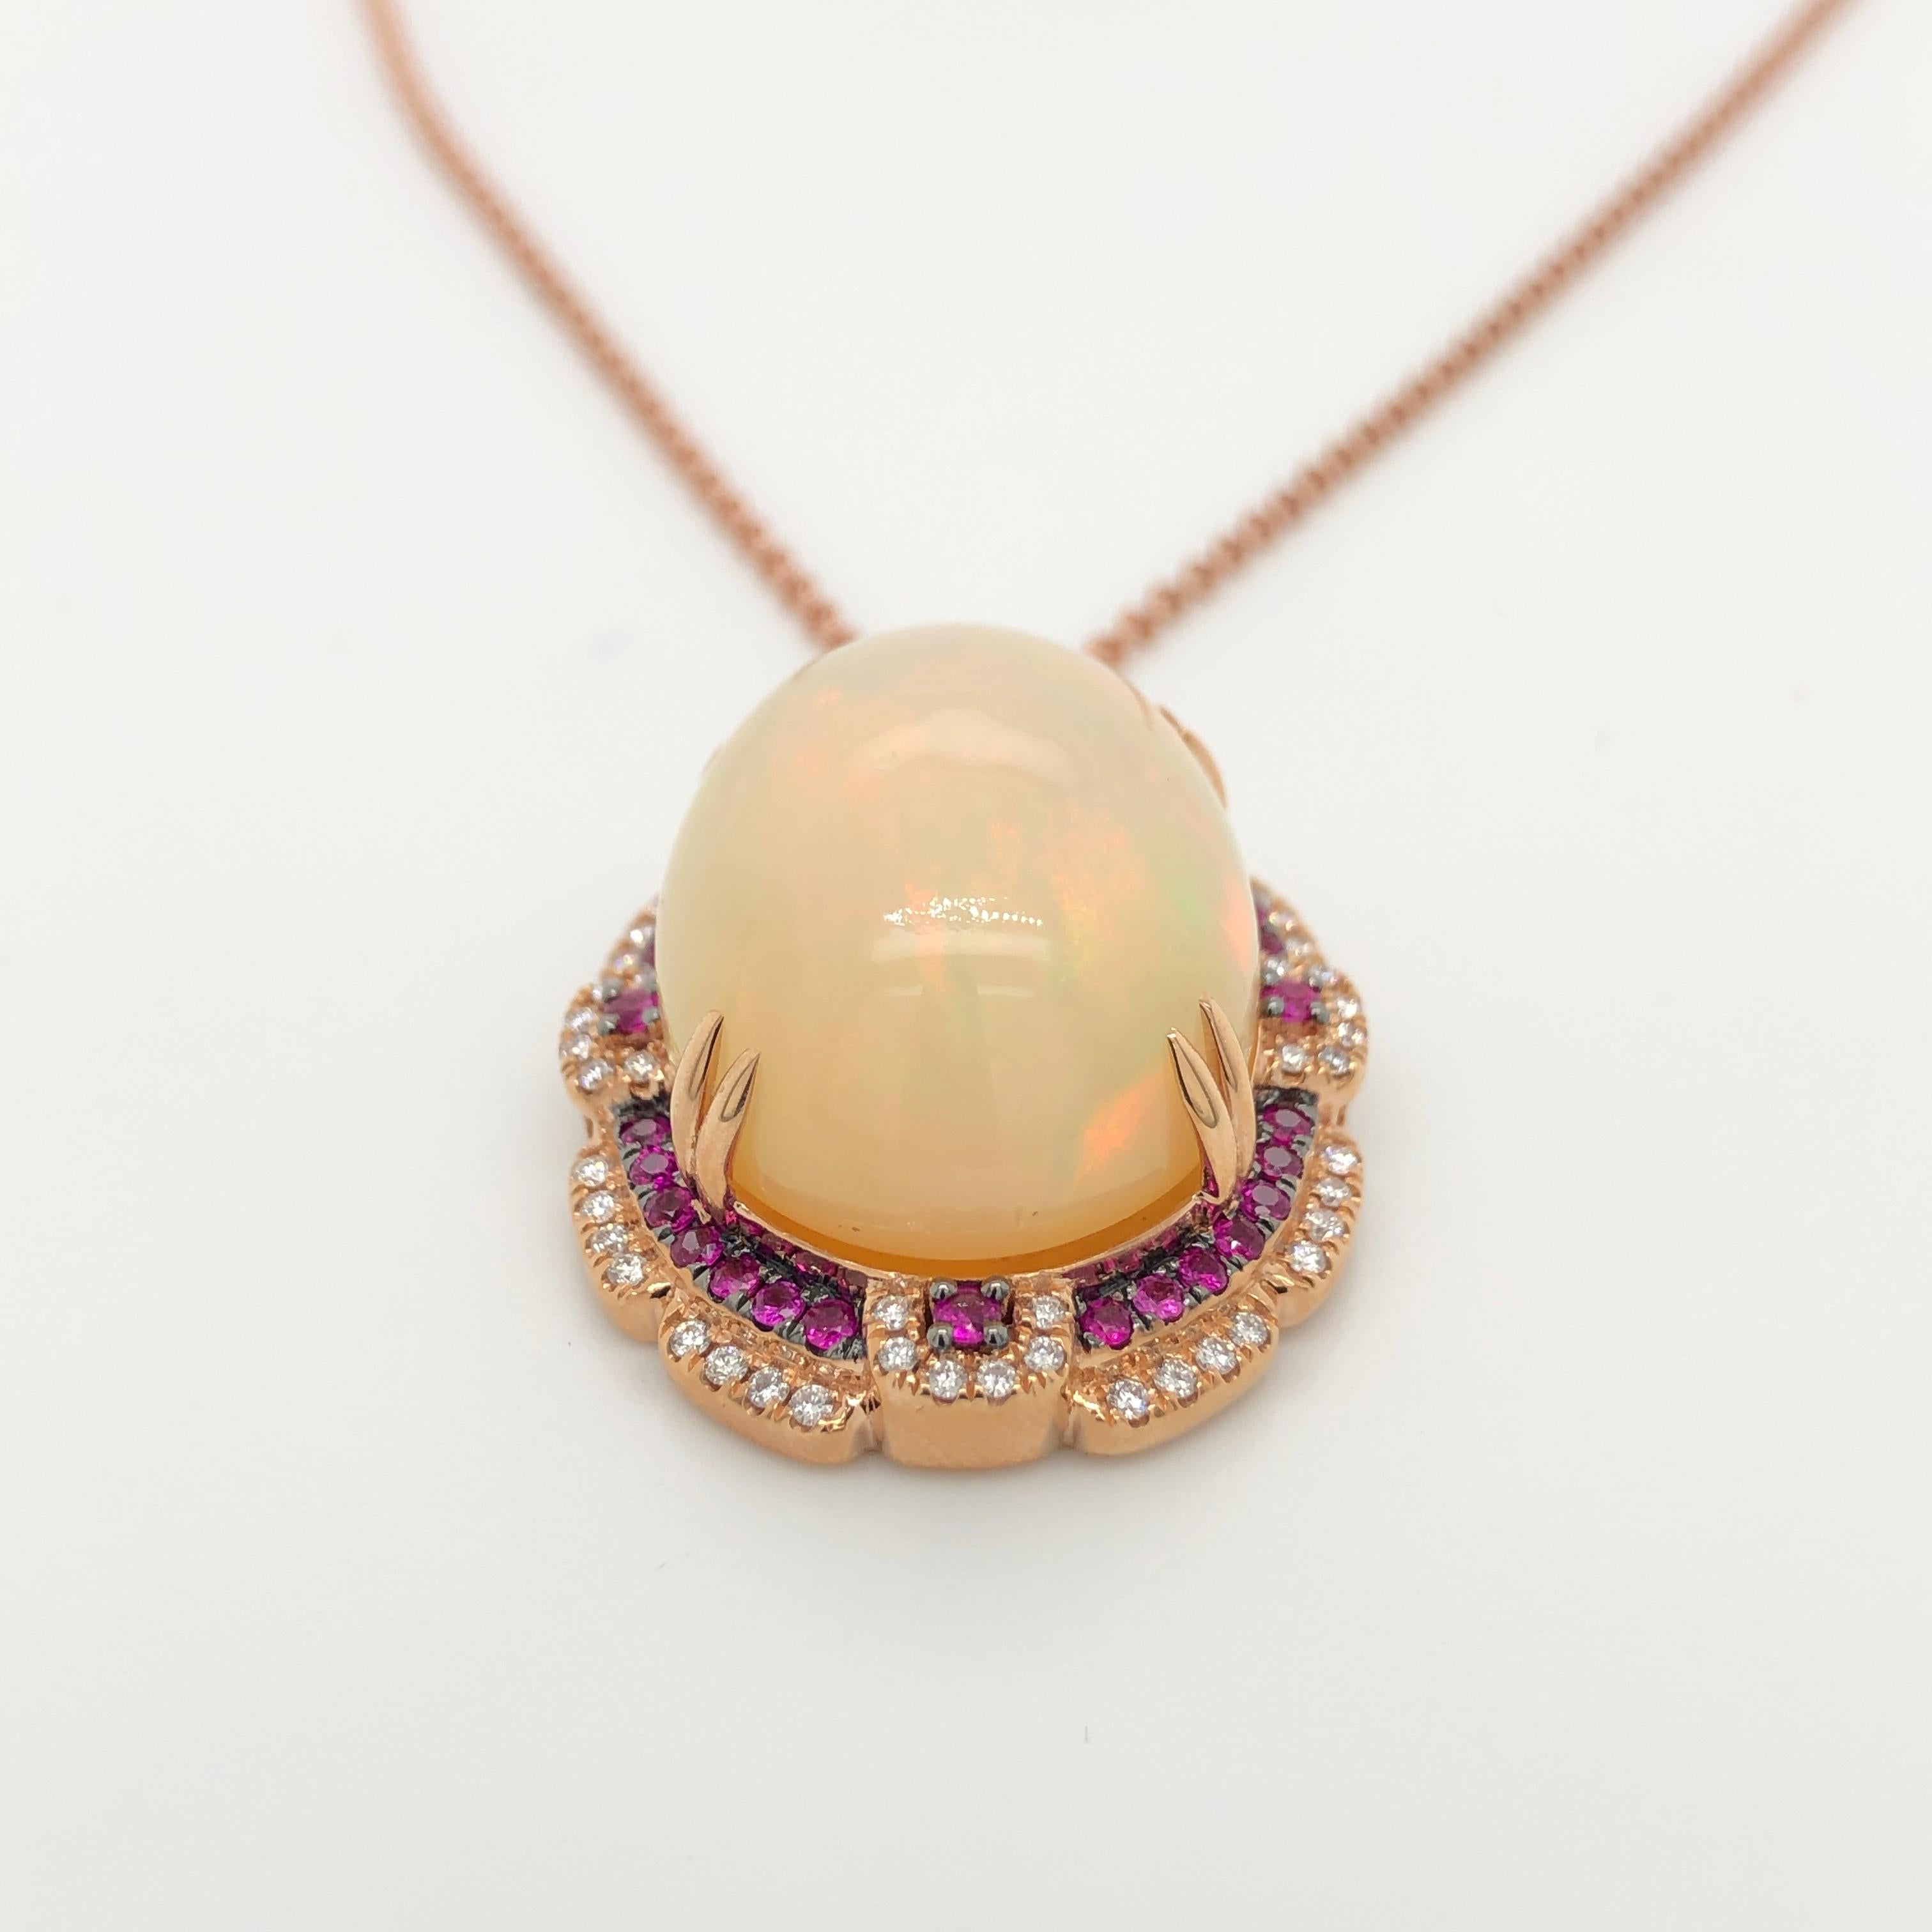 levian opal pendant